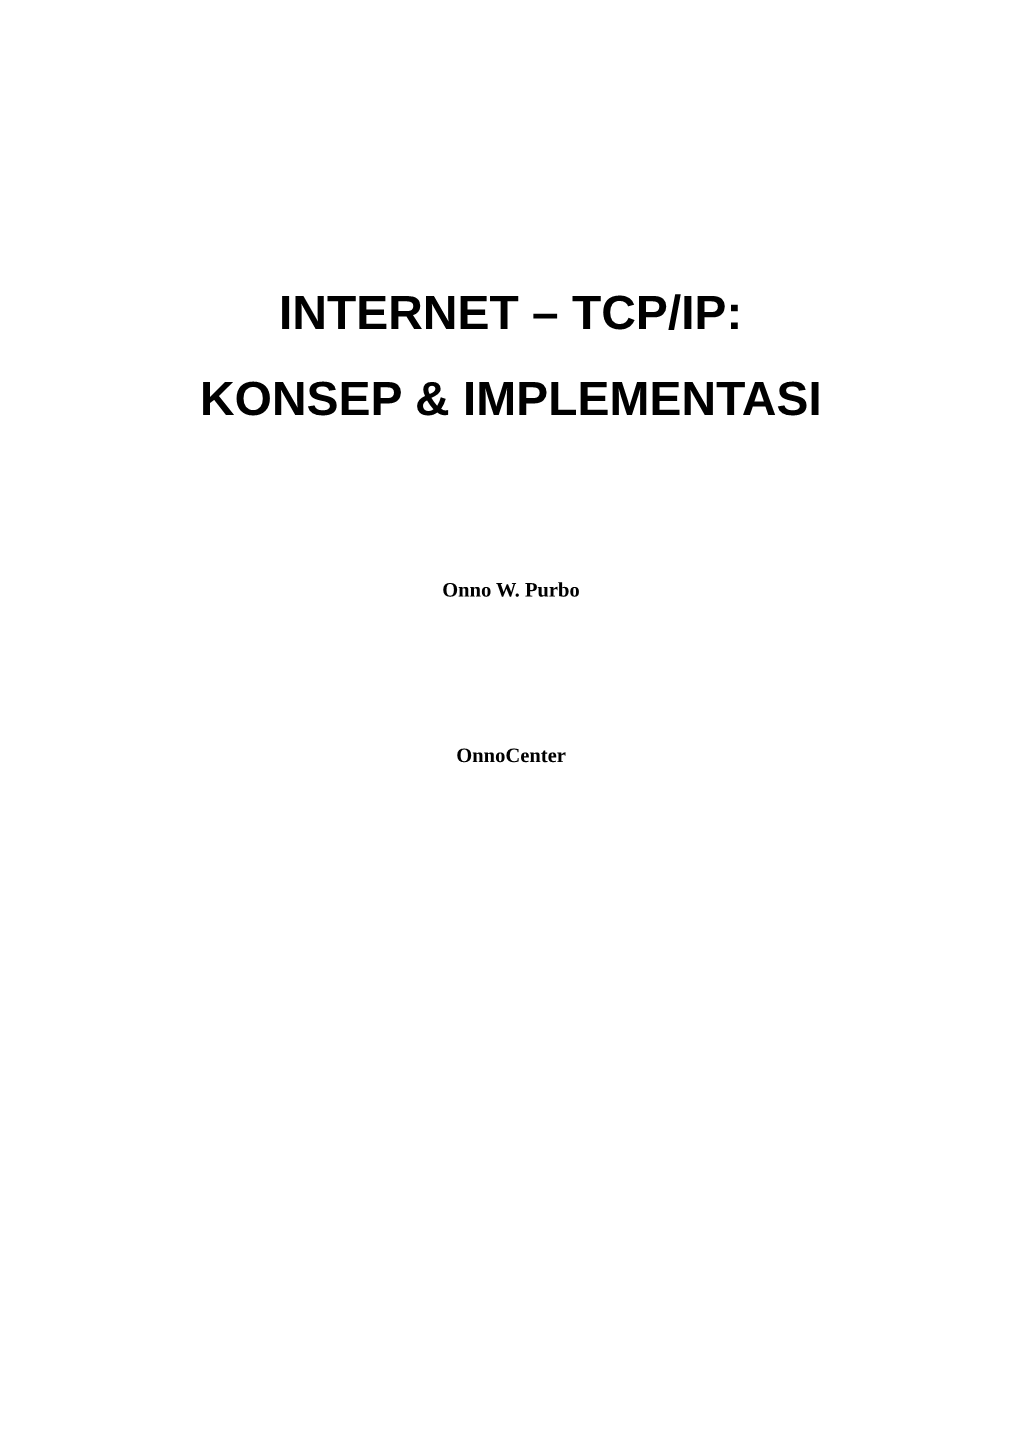 Internet – Tcp/Ip: Konsep & Implementasi